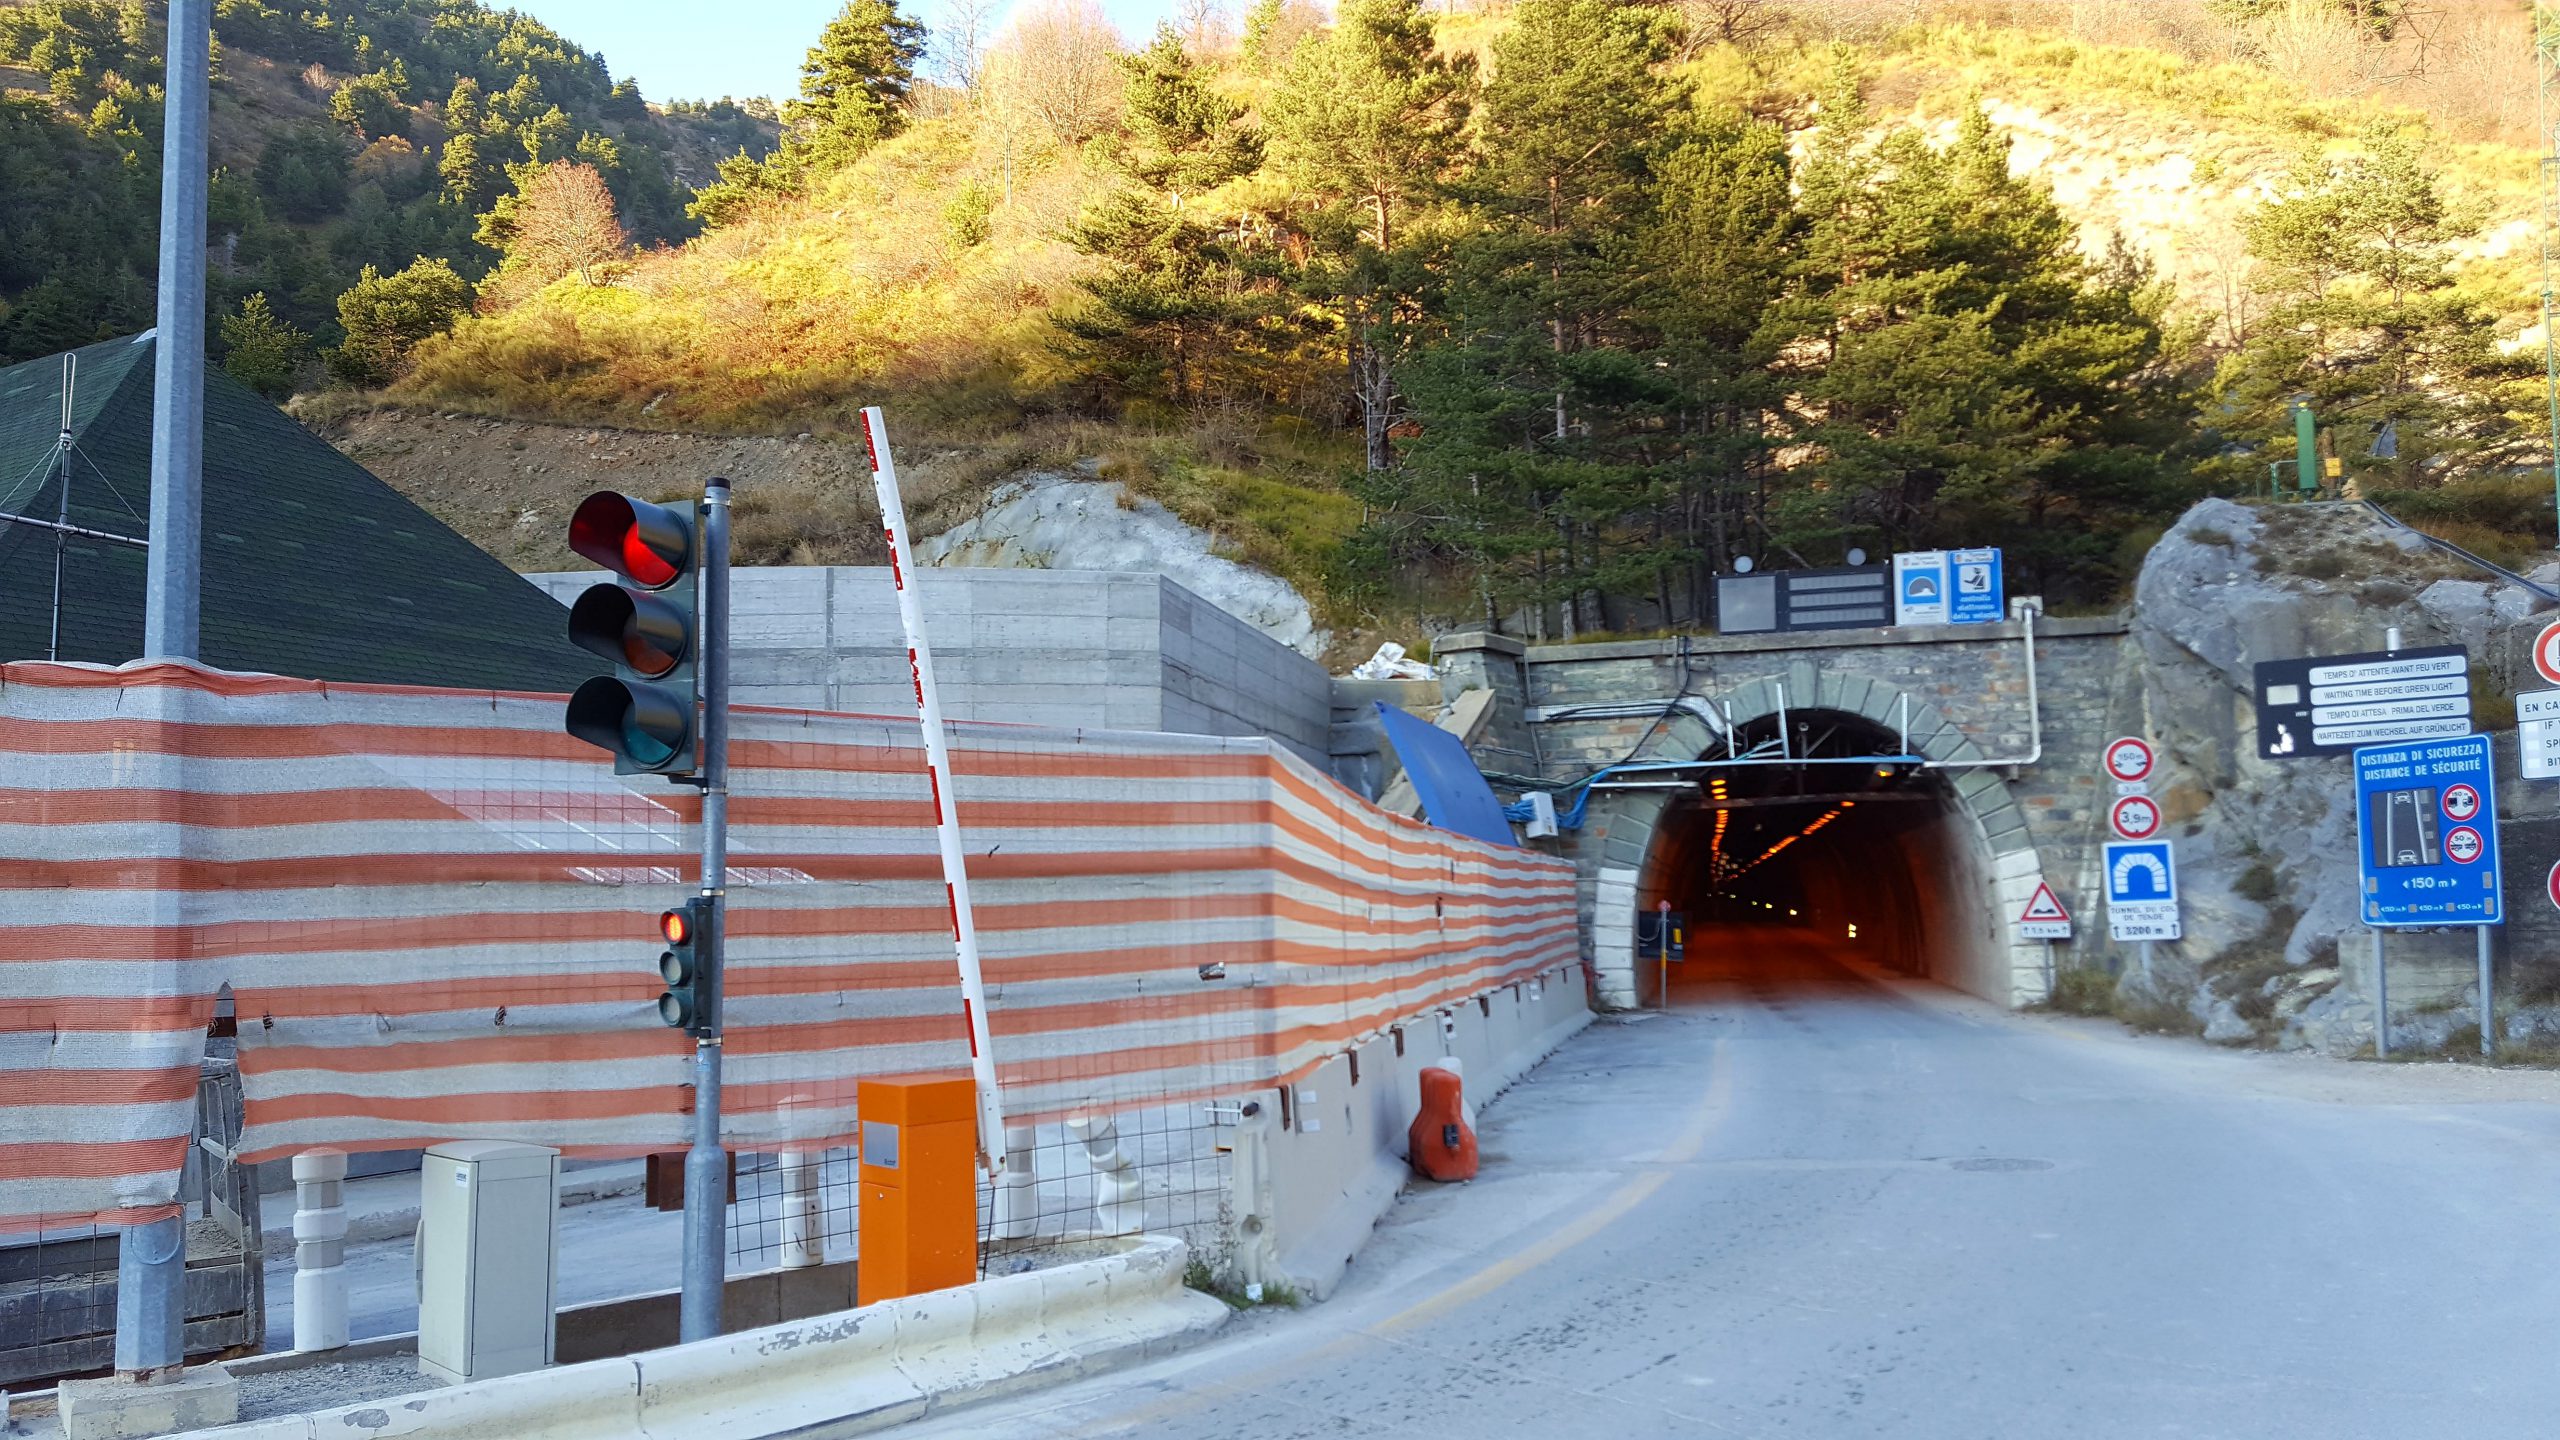 Tenda - ingresso francese tunnel di Tenda Giorgio Bernardi 2017